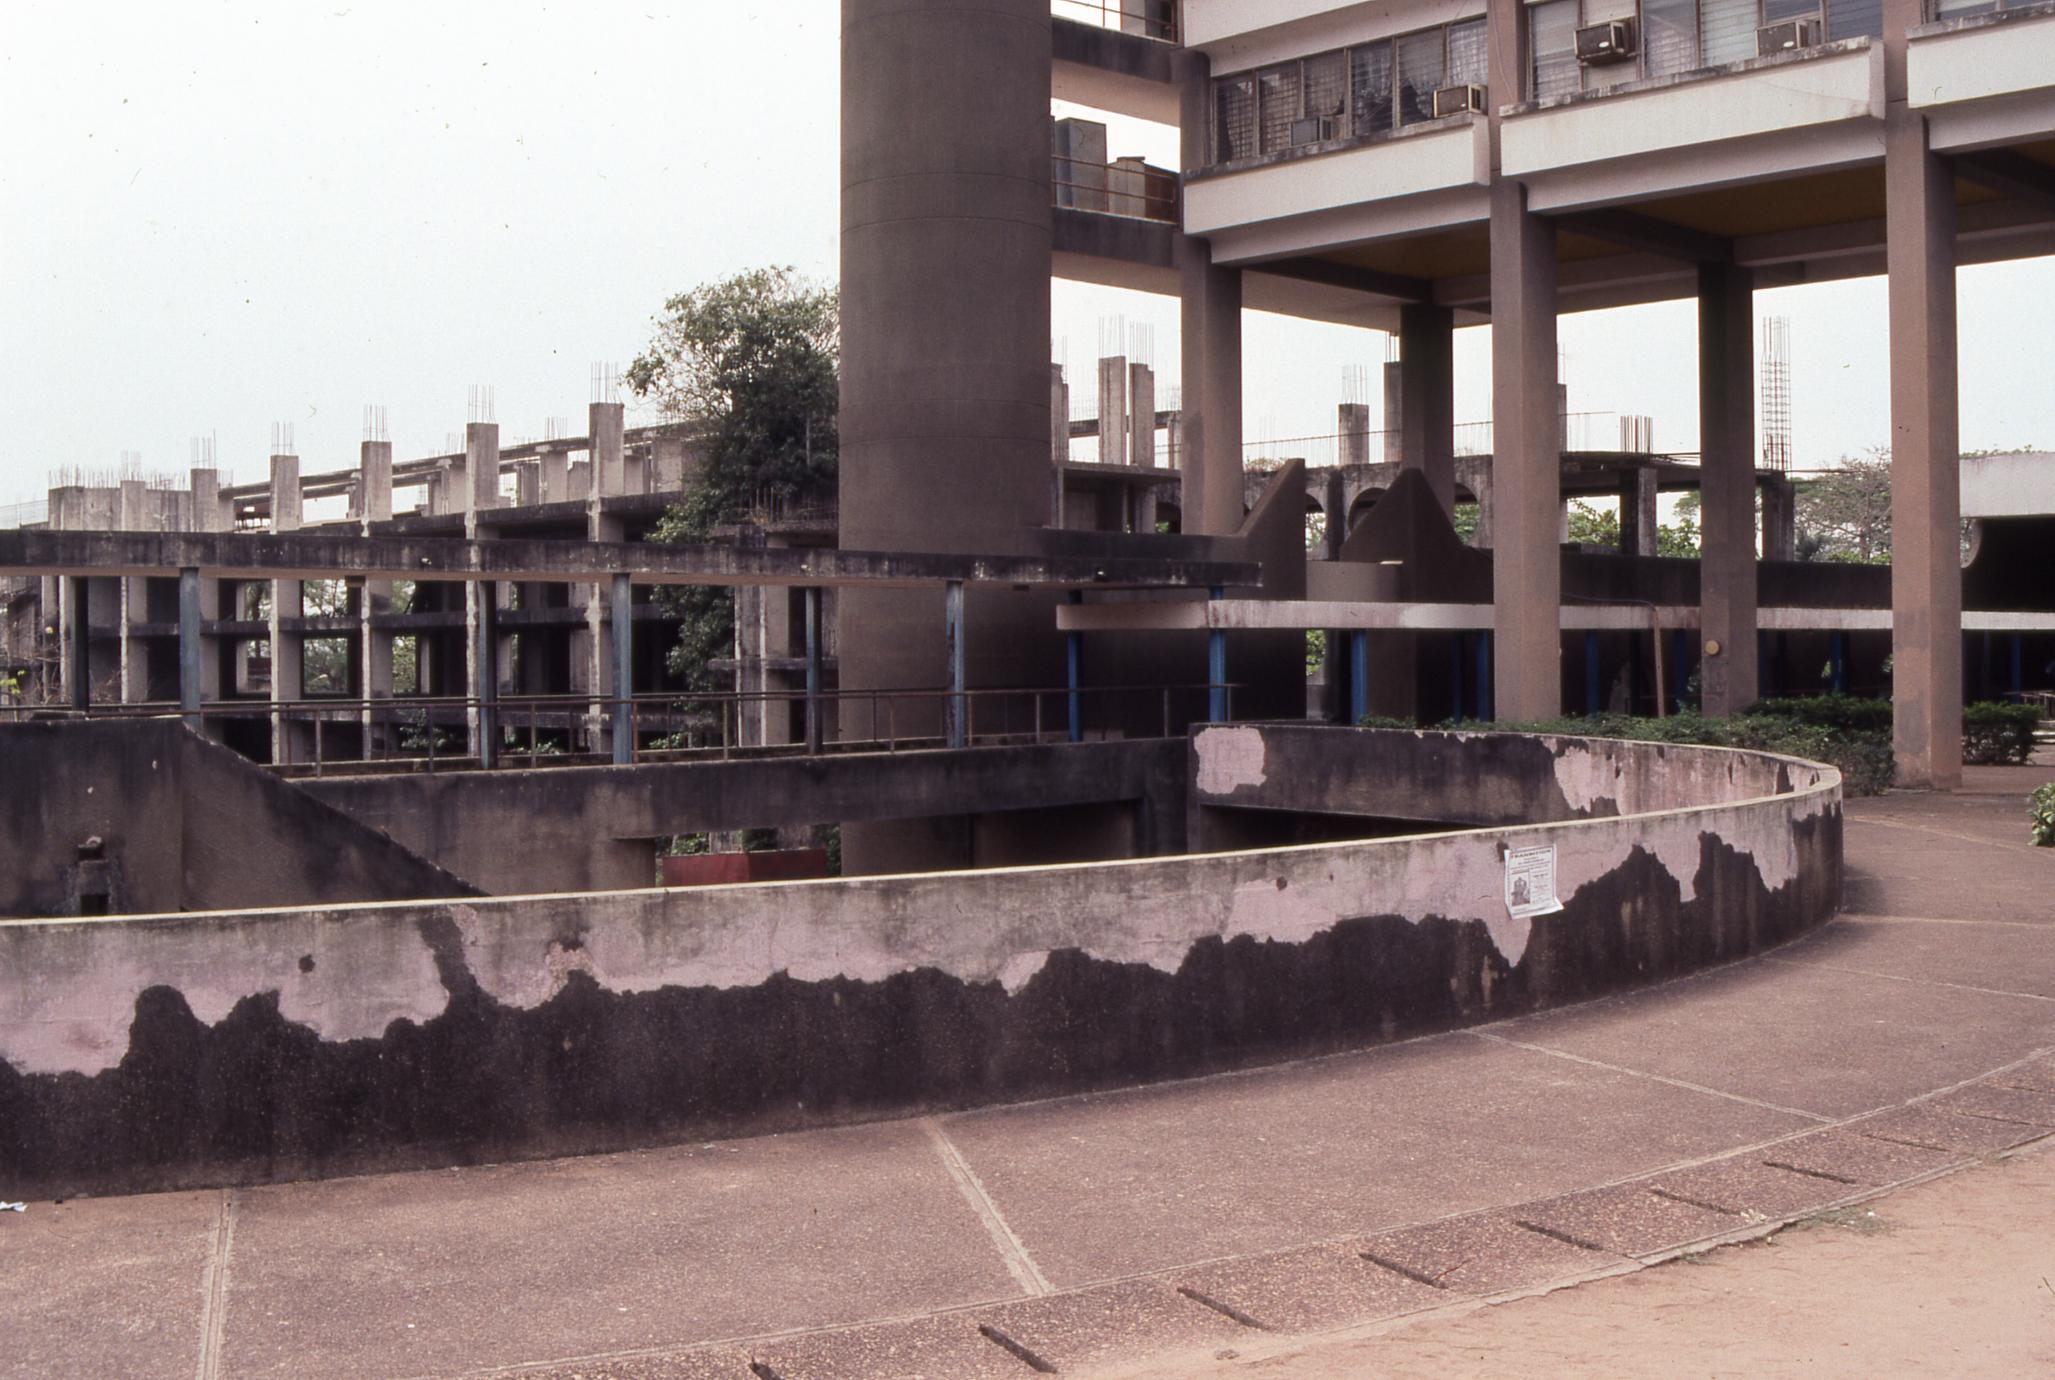 Obafemi Awolowo University campus building